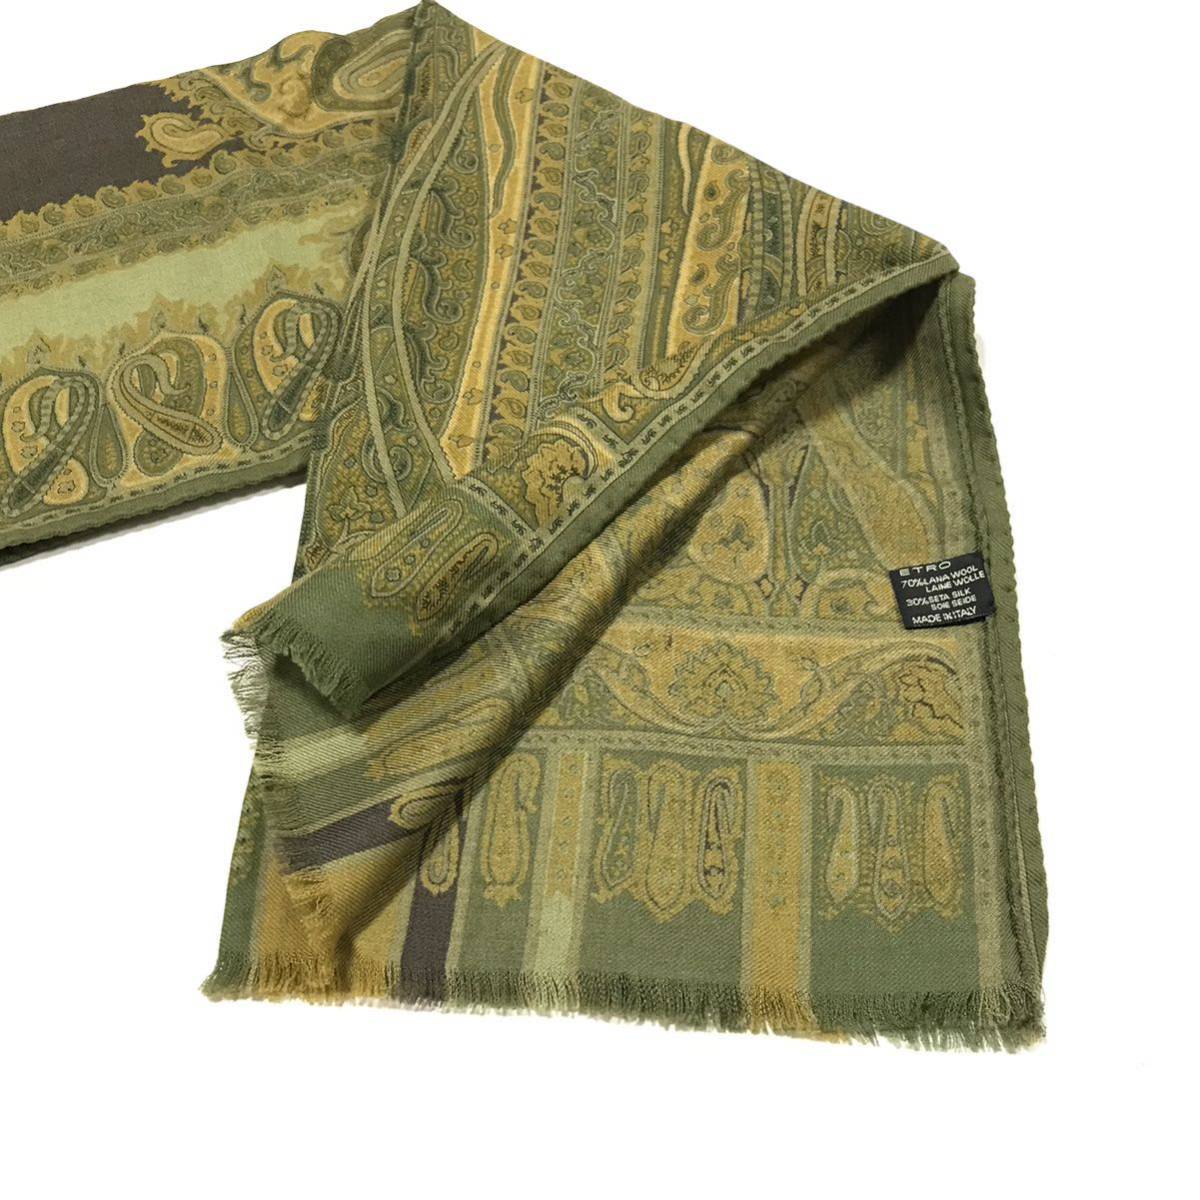 [ Etro ] genuine article ETRO muffler peiz Lee pattern total length 131cm width 42cm wool × silk stole shawl men's lady's Italy made postage 250 jpy 